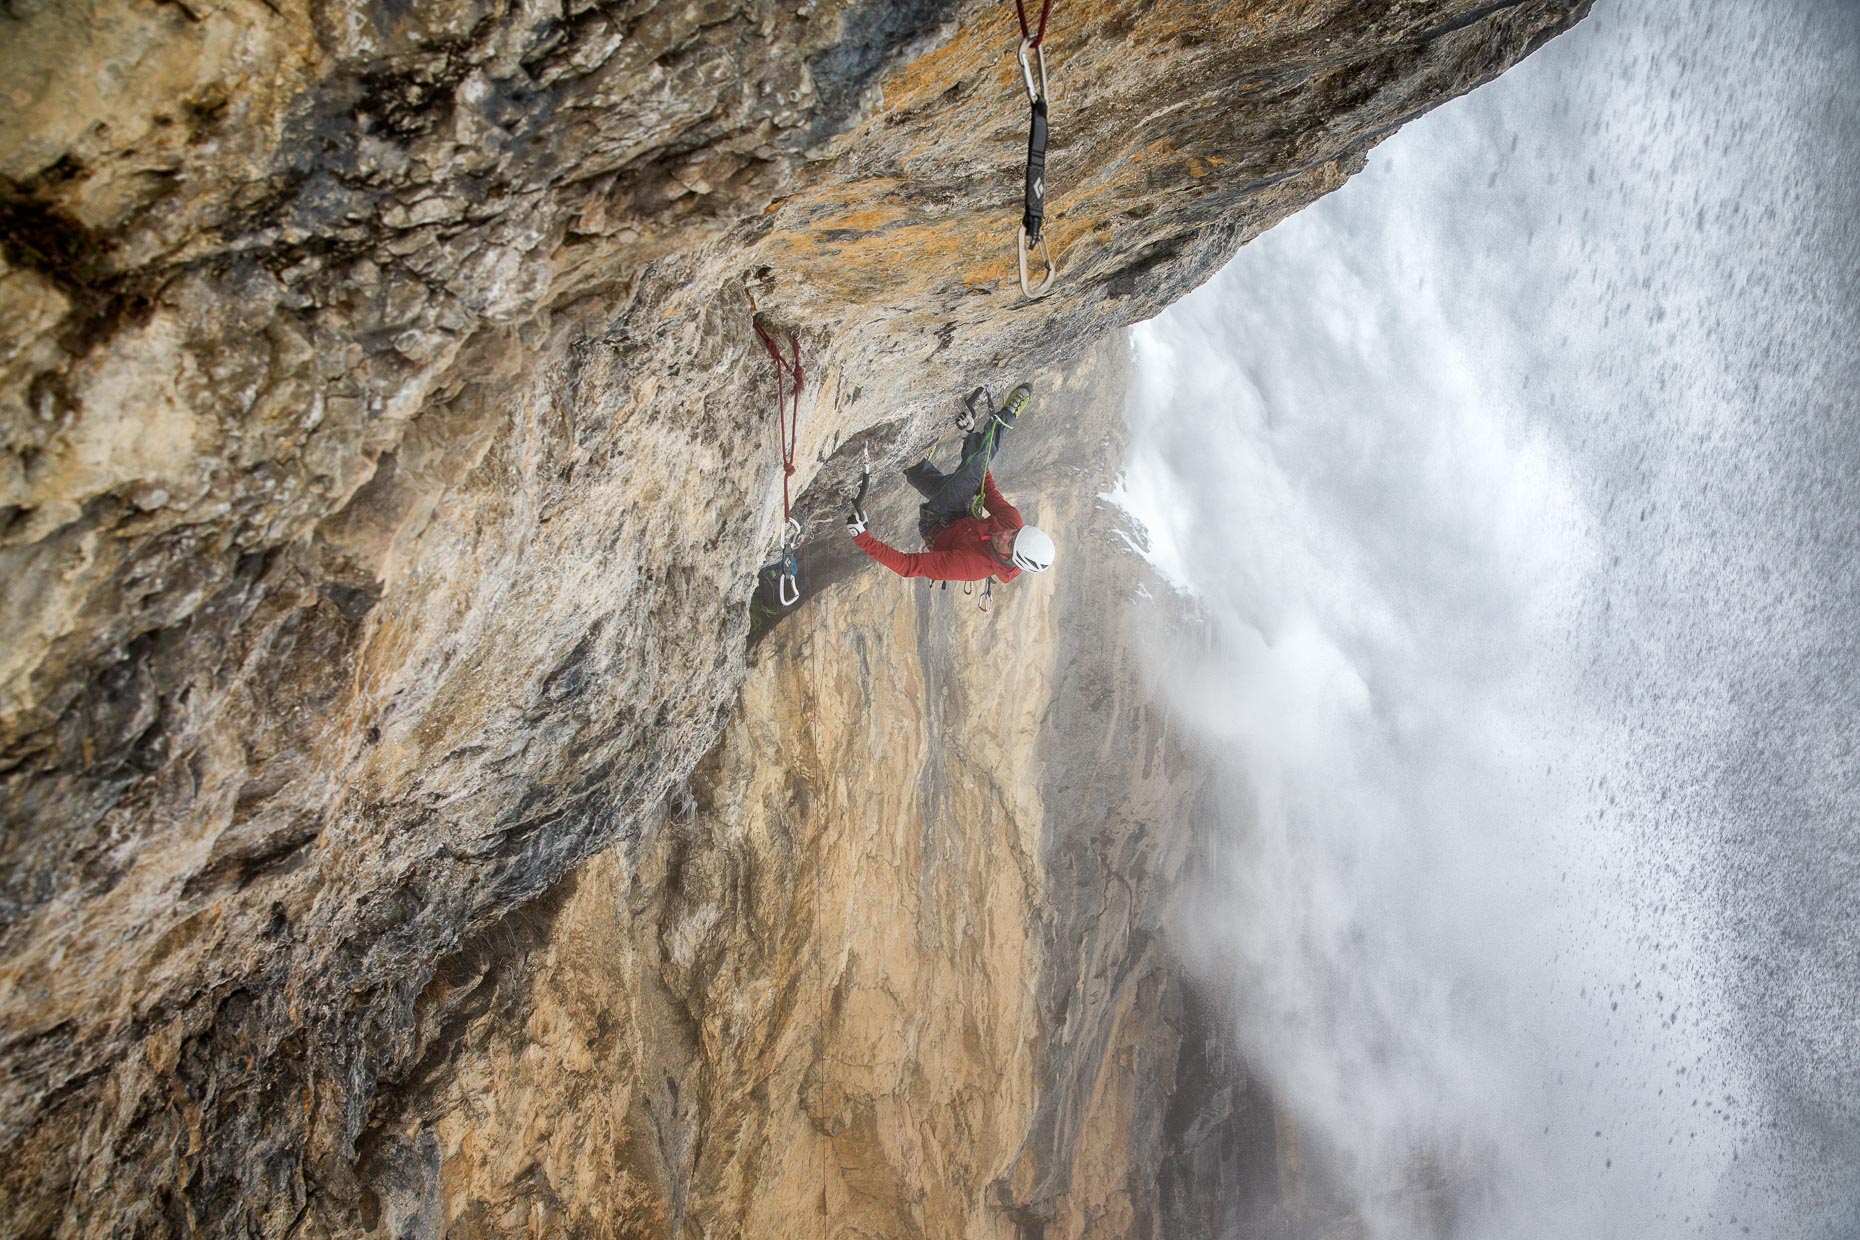 Mixed climbing | Stefan Kuerzi - Climbing Photography